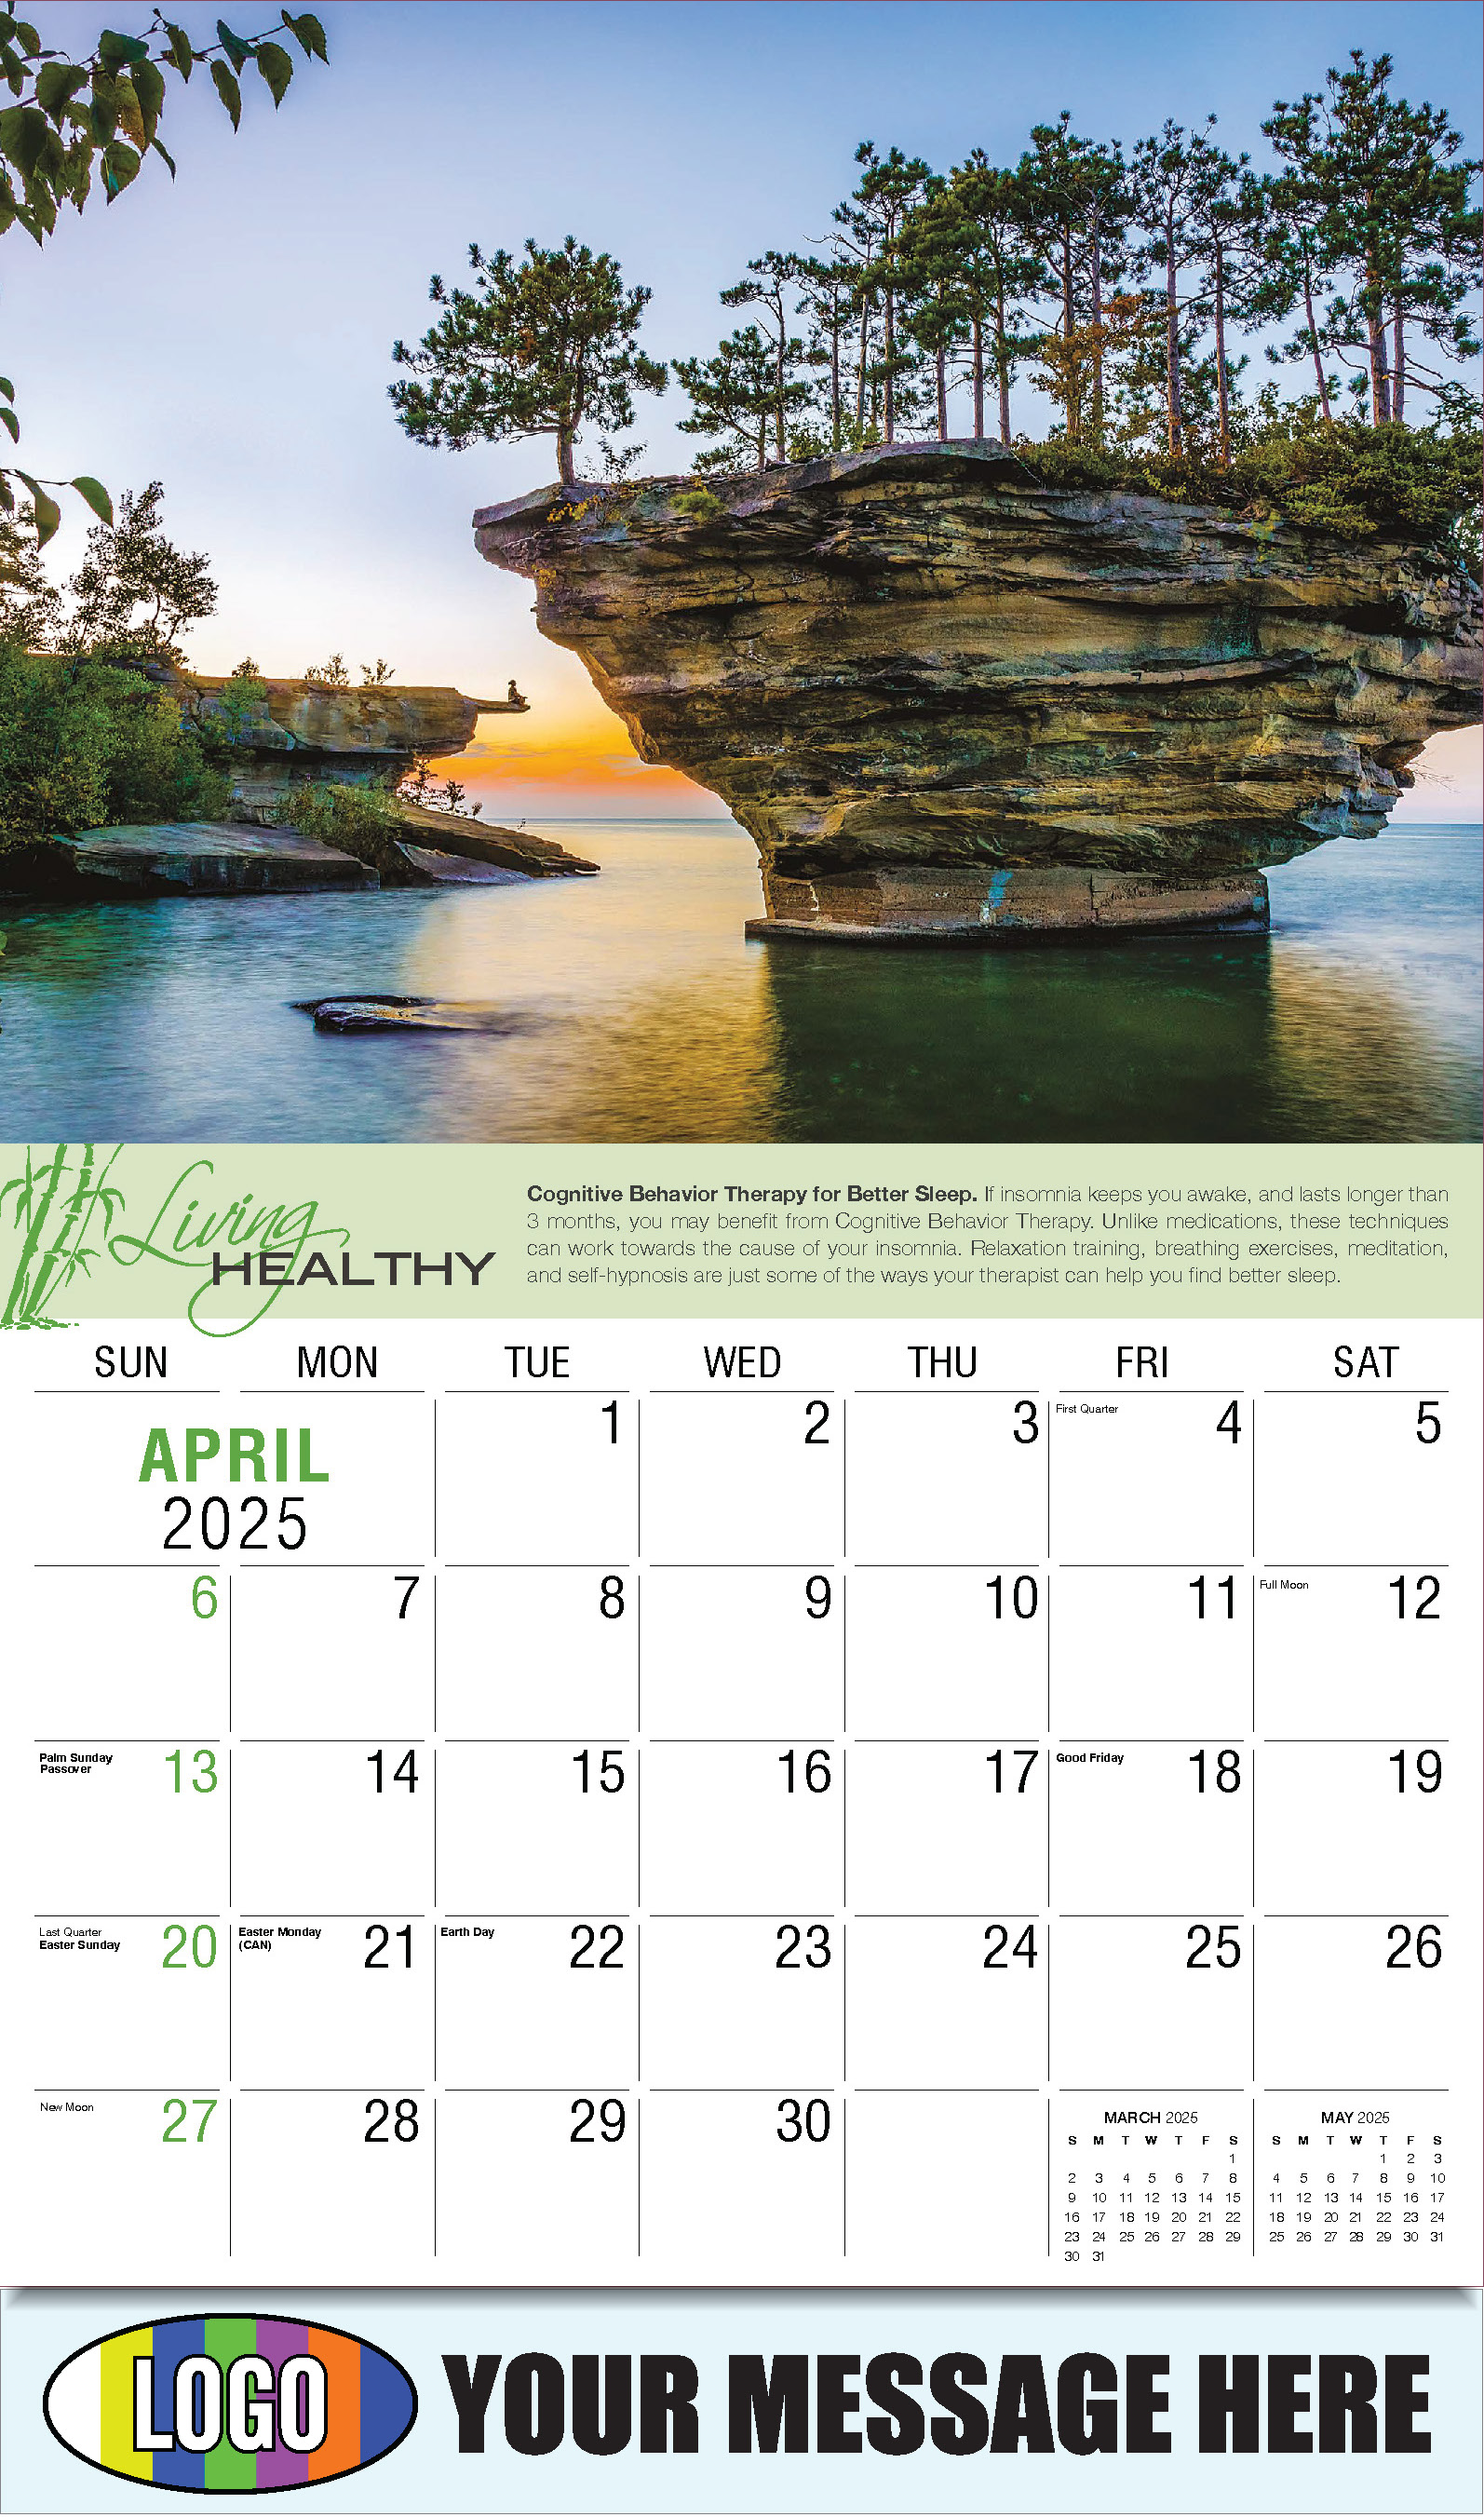 Living Healthy 2025 Business Promotional Calendar - April